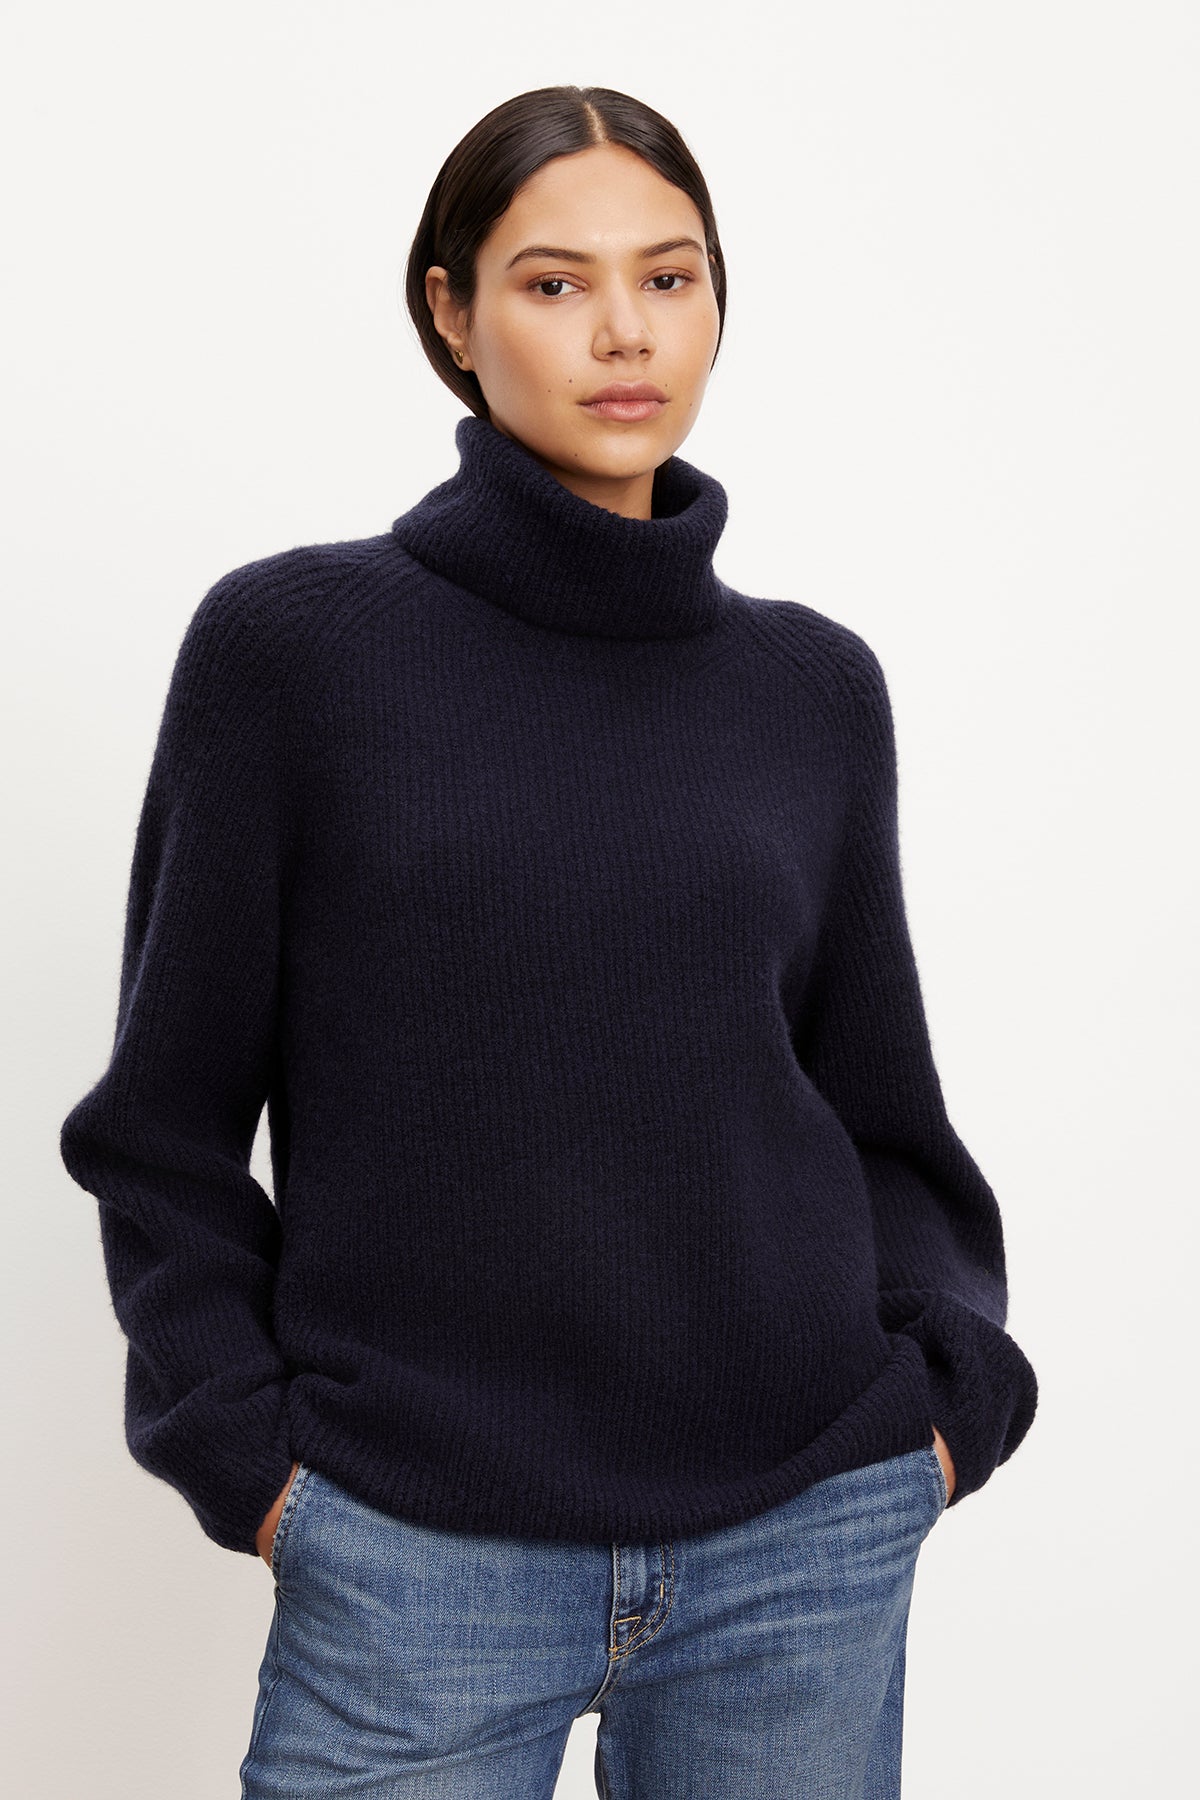 A model wearing a cozy Velvet by Graham & Spencer JUDITH turtleneck sweater.-35577840369857